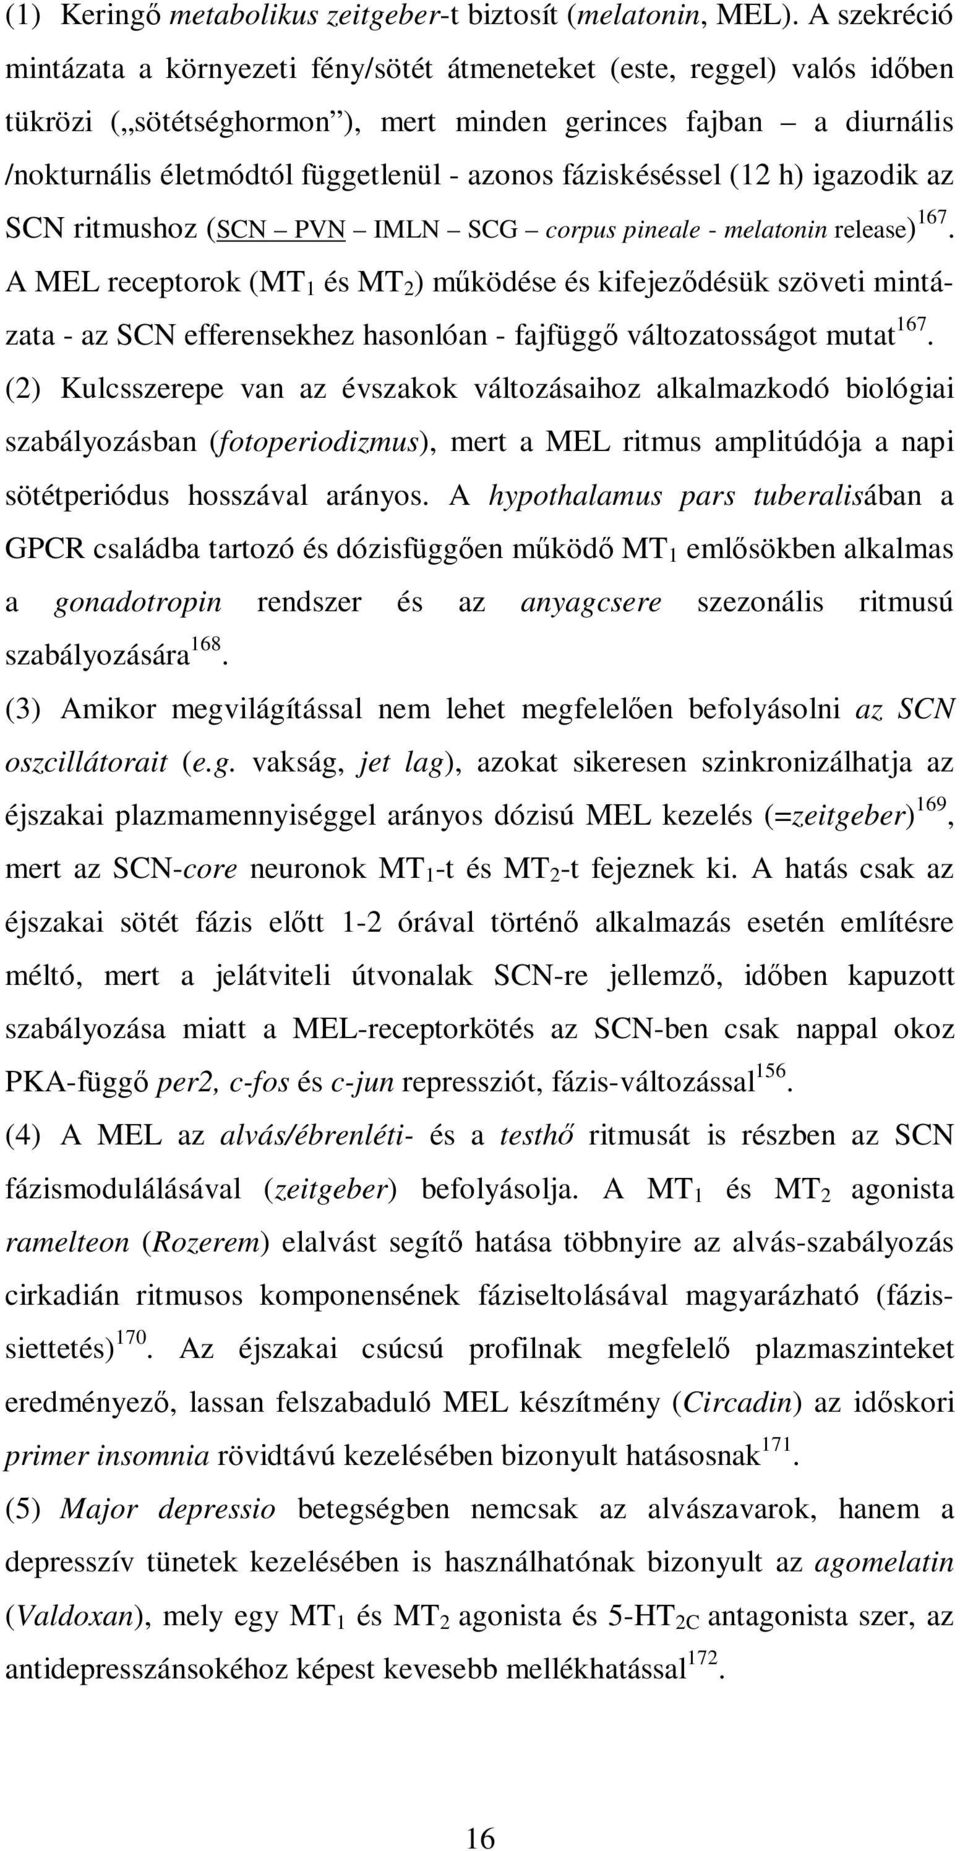 fáziskéséssel (12 h) igazodik az SCN ritmushoz (SCN PVN IMLN SCG corpus pineale - melatonin release) 167.